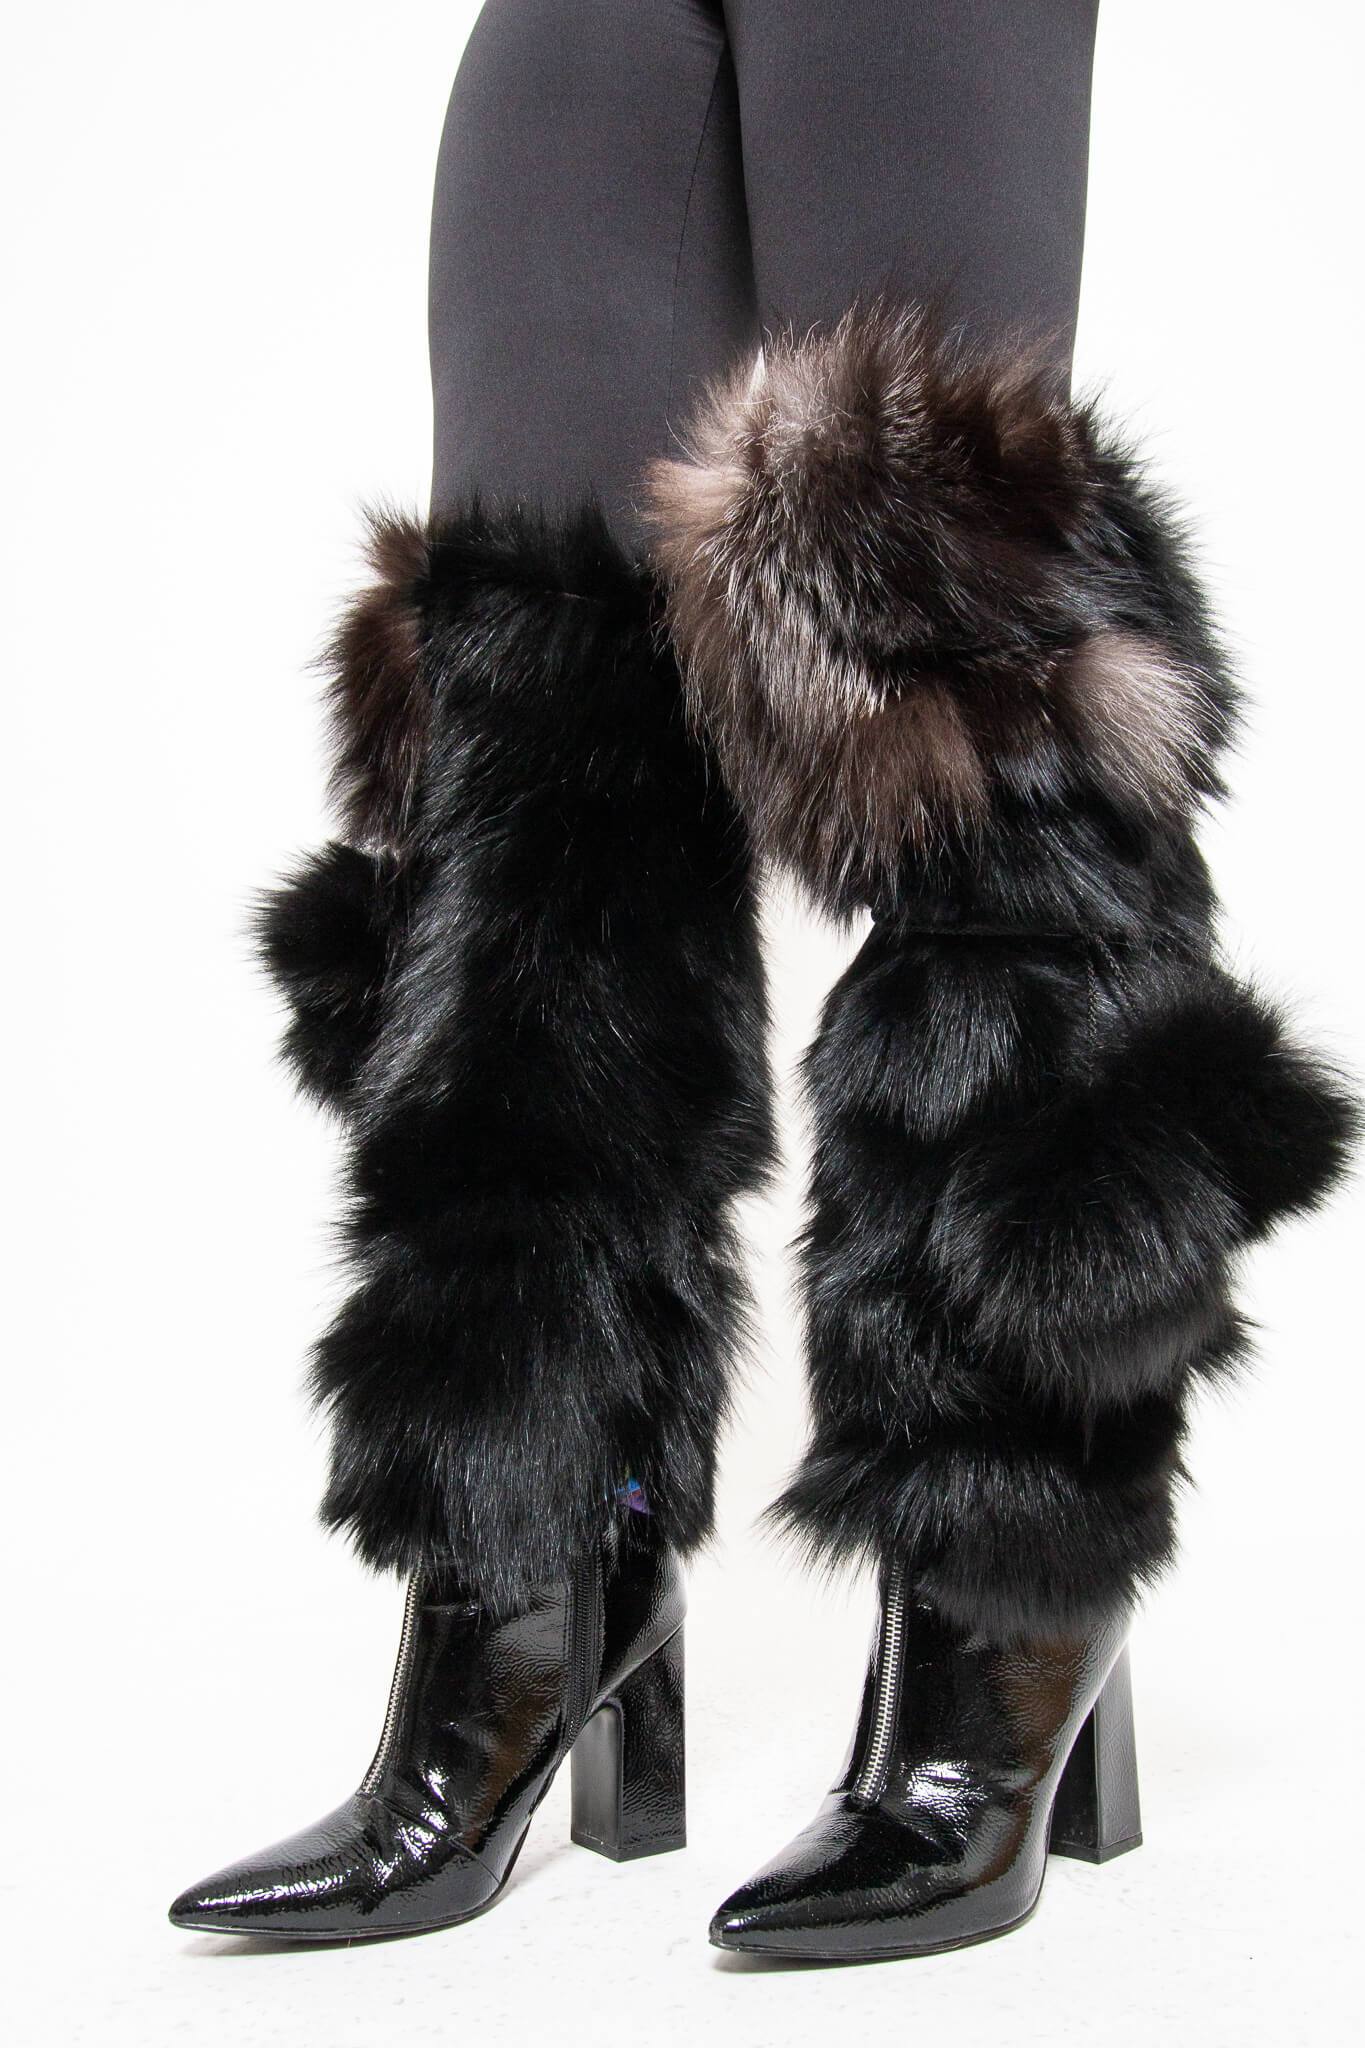 Fox Fur Boot Covers With Pom Pom Accessories Starlight Furs Black Fox Fur with Silver Fox Fur Trim 14" 